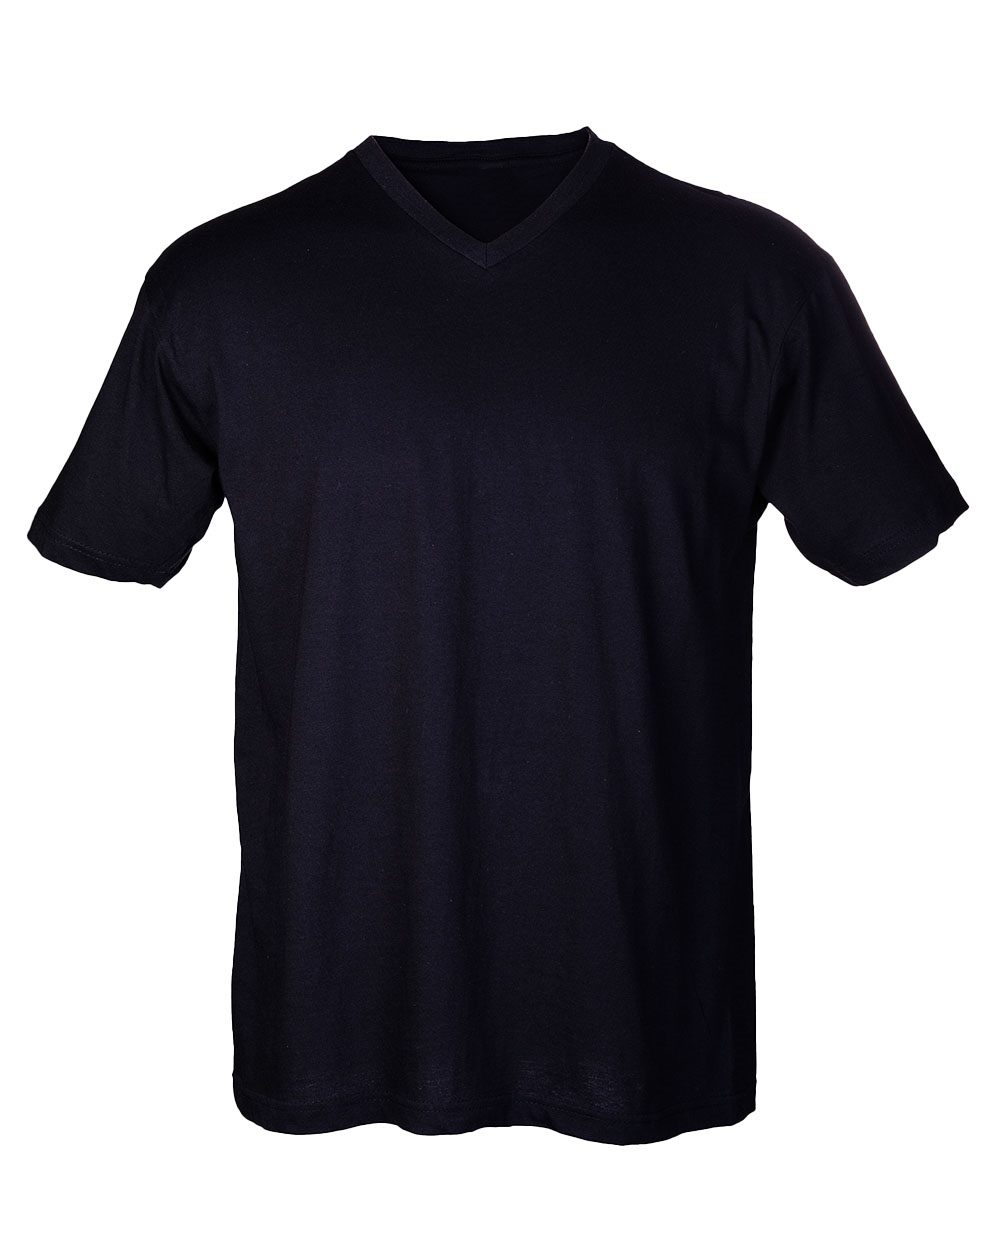 Tultex 206 - Unisex Fine Jersey V-Neck T-Shirt